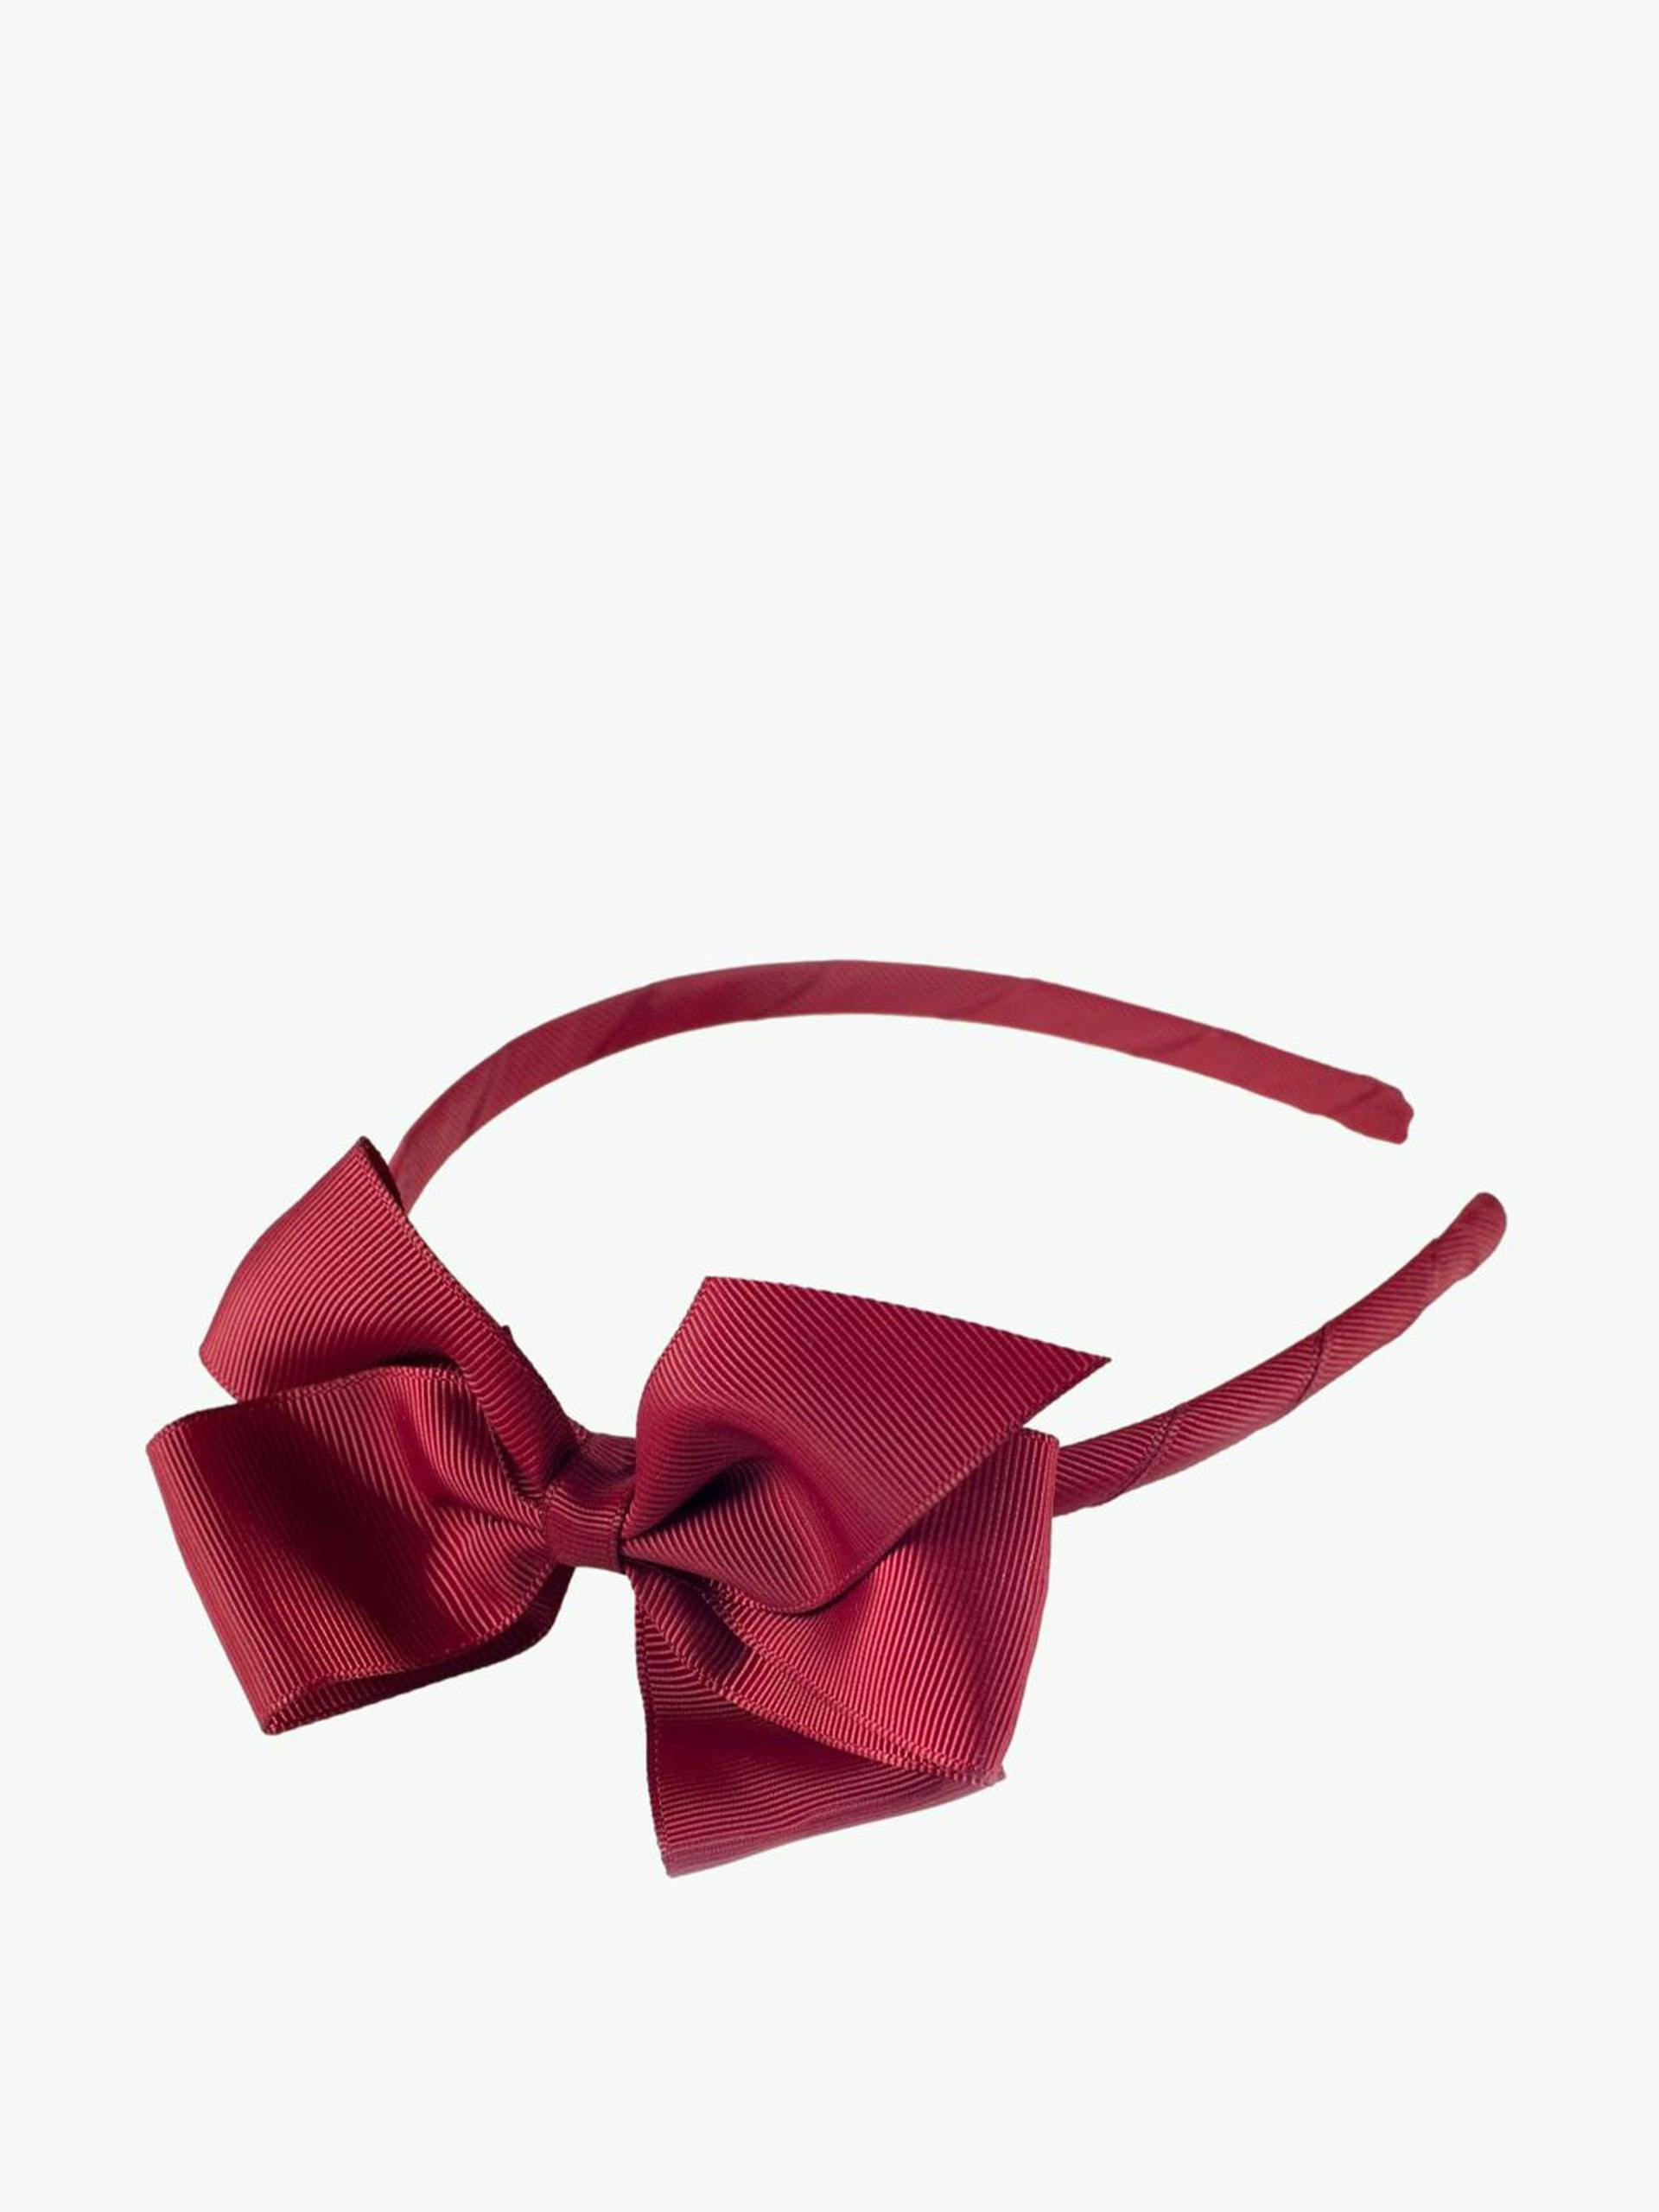 Rust red children's side-bow headband